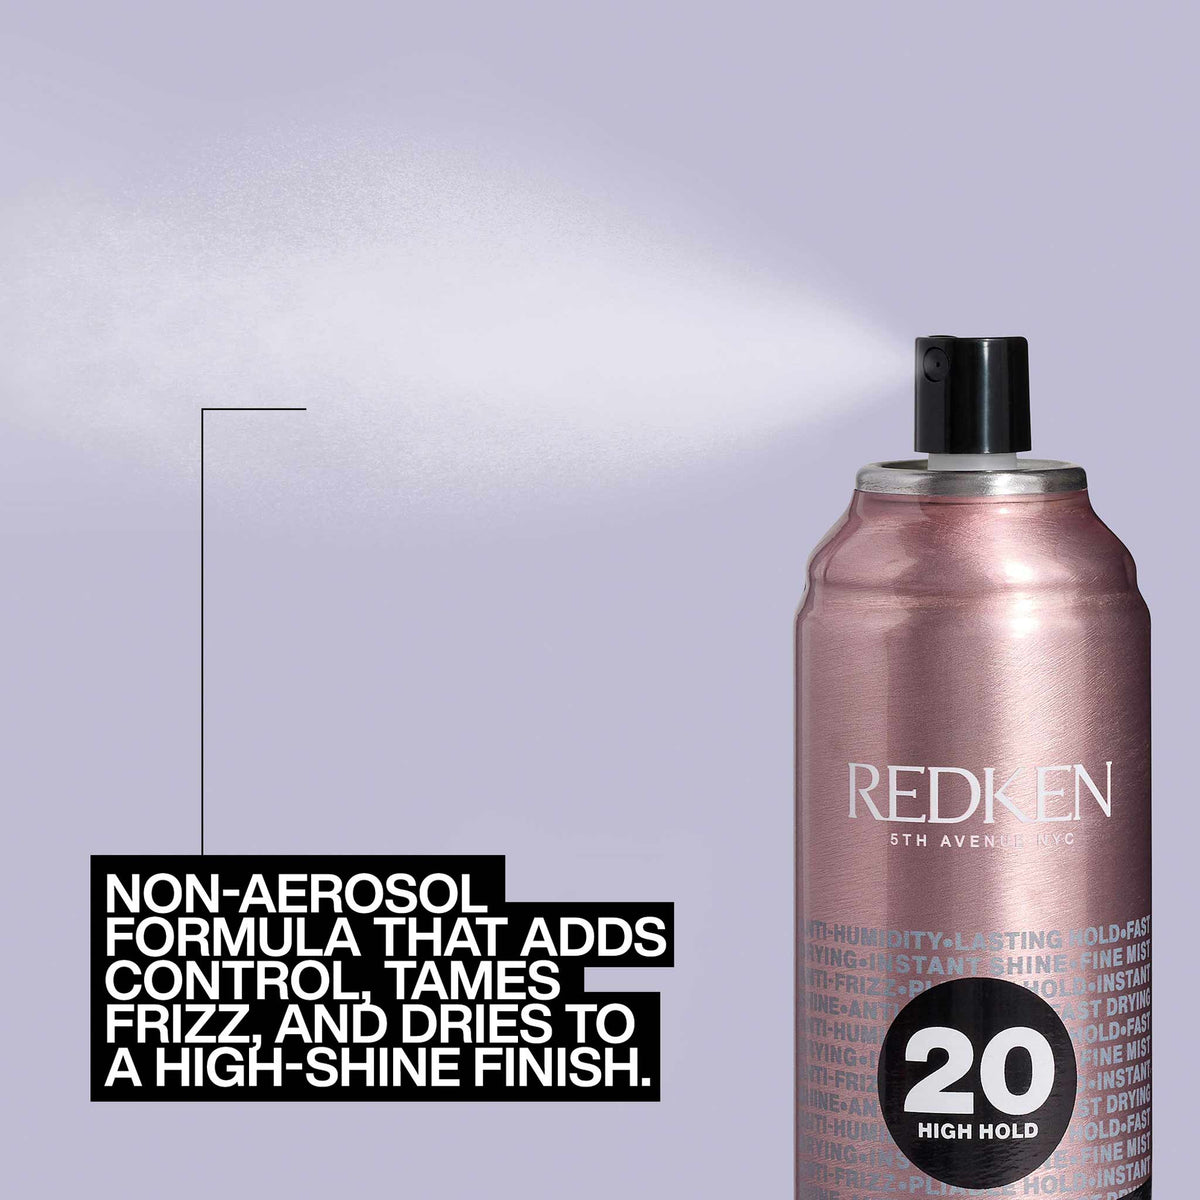 Redken Pure Force Anti-Frizz Hairspray 250ml